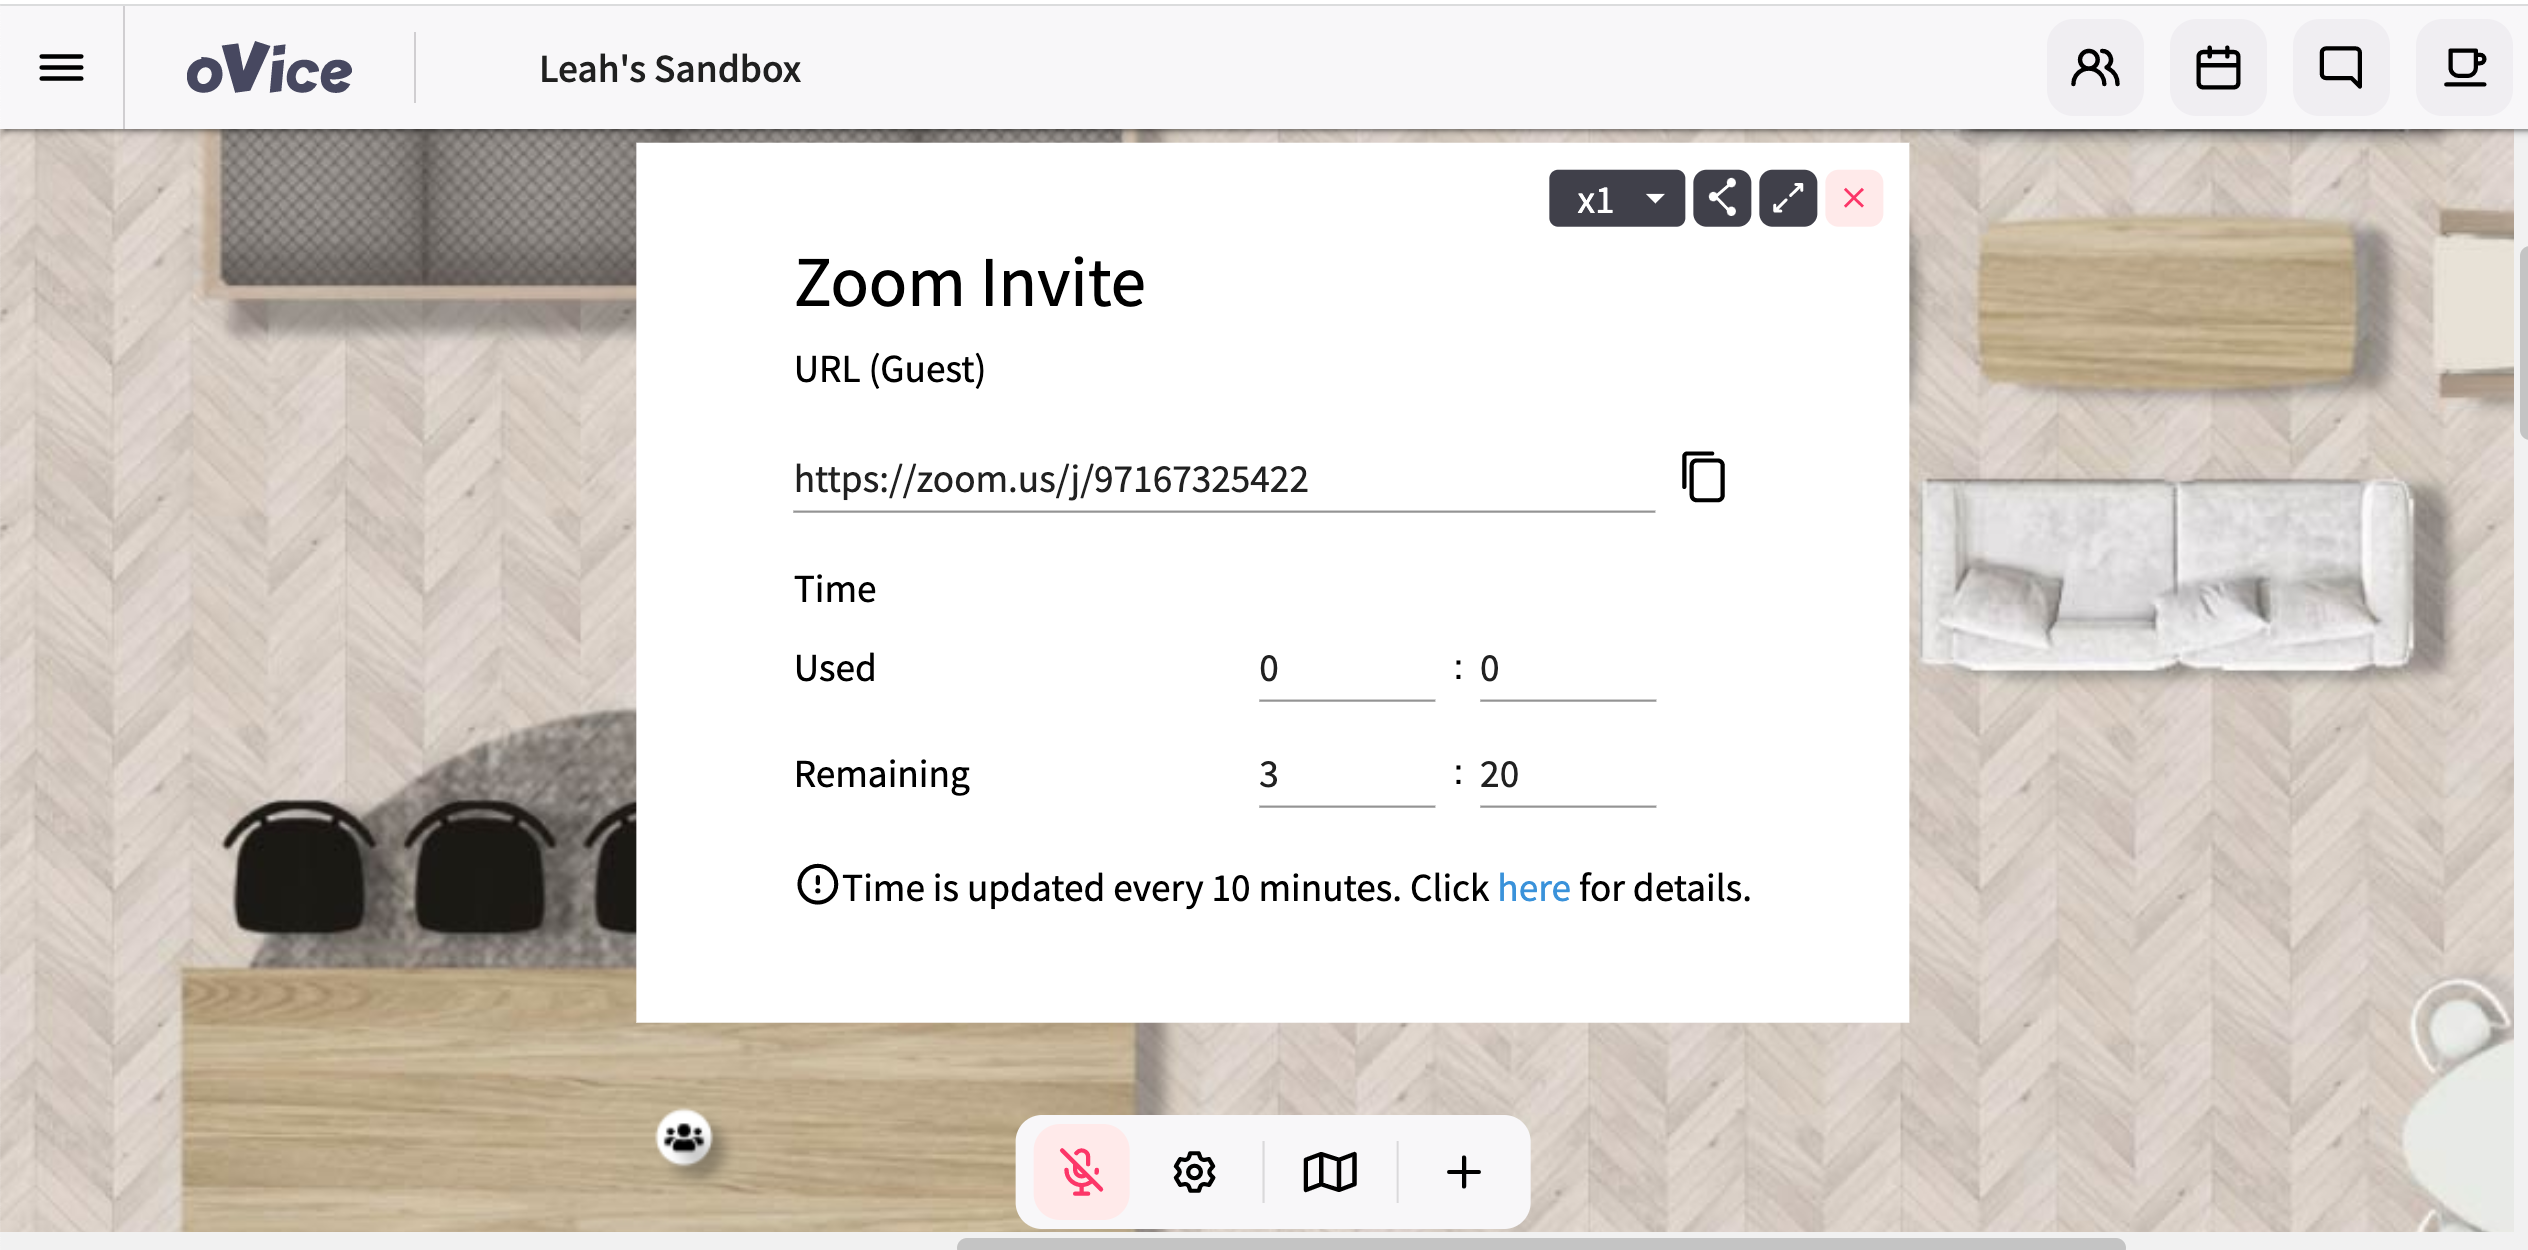 Zoom_Invite_Window_Image.png